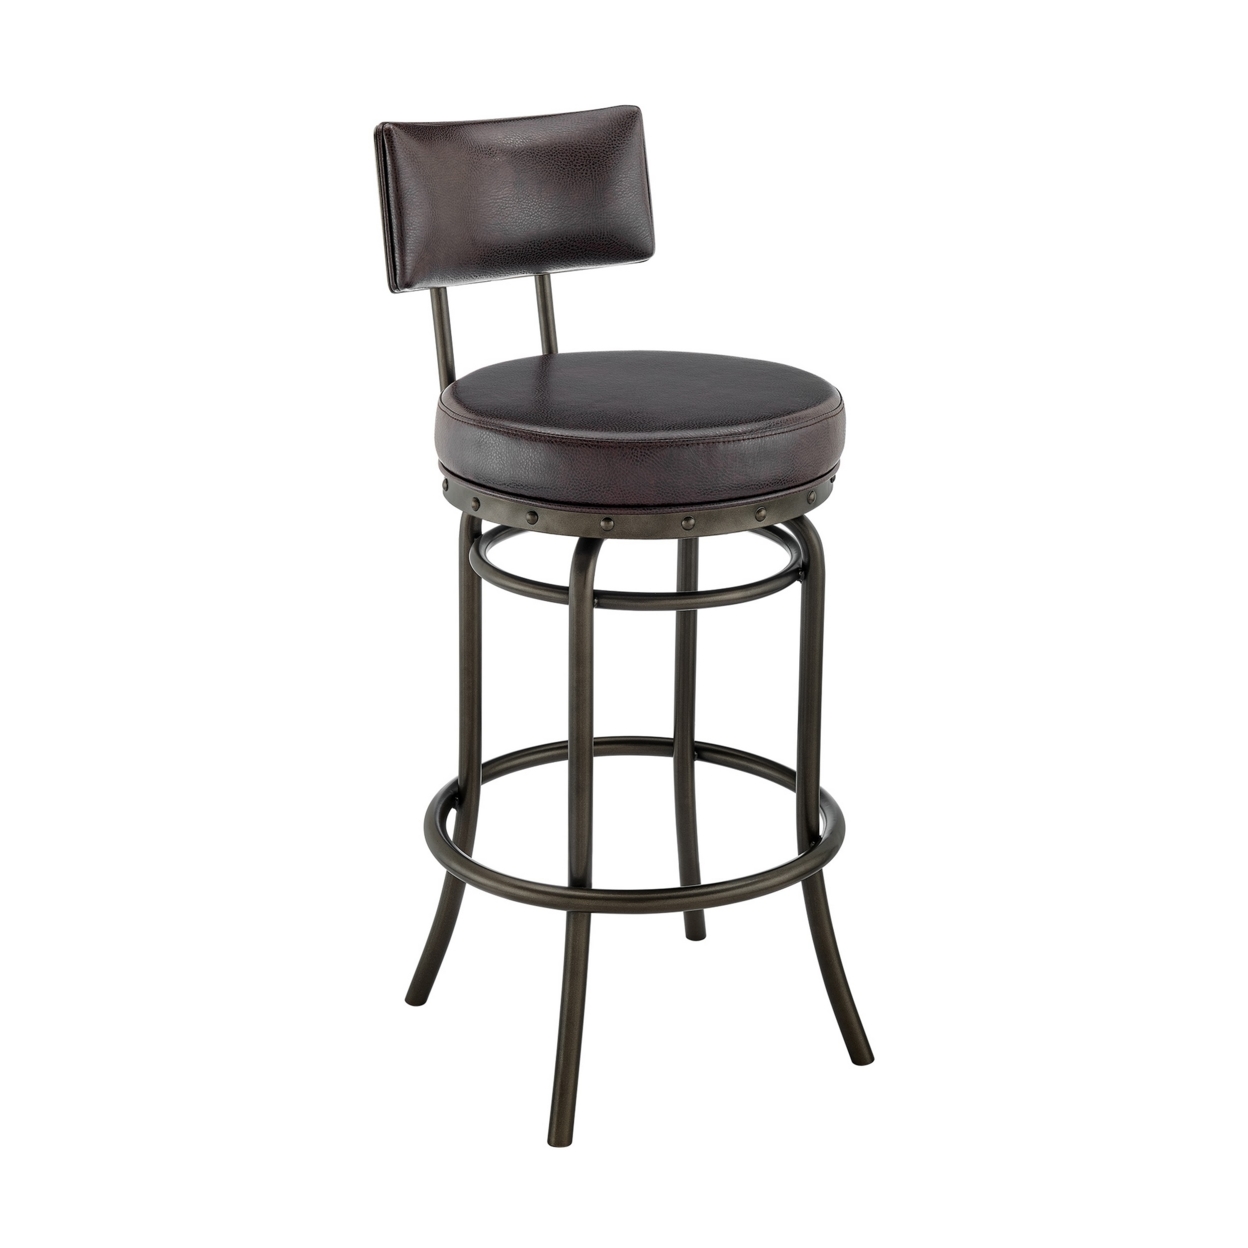 Felicity 30 Inch Round Swivel Bar Stool Chair, Brown Faux Leather Cushions- Saltoro Sherpi